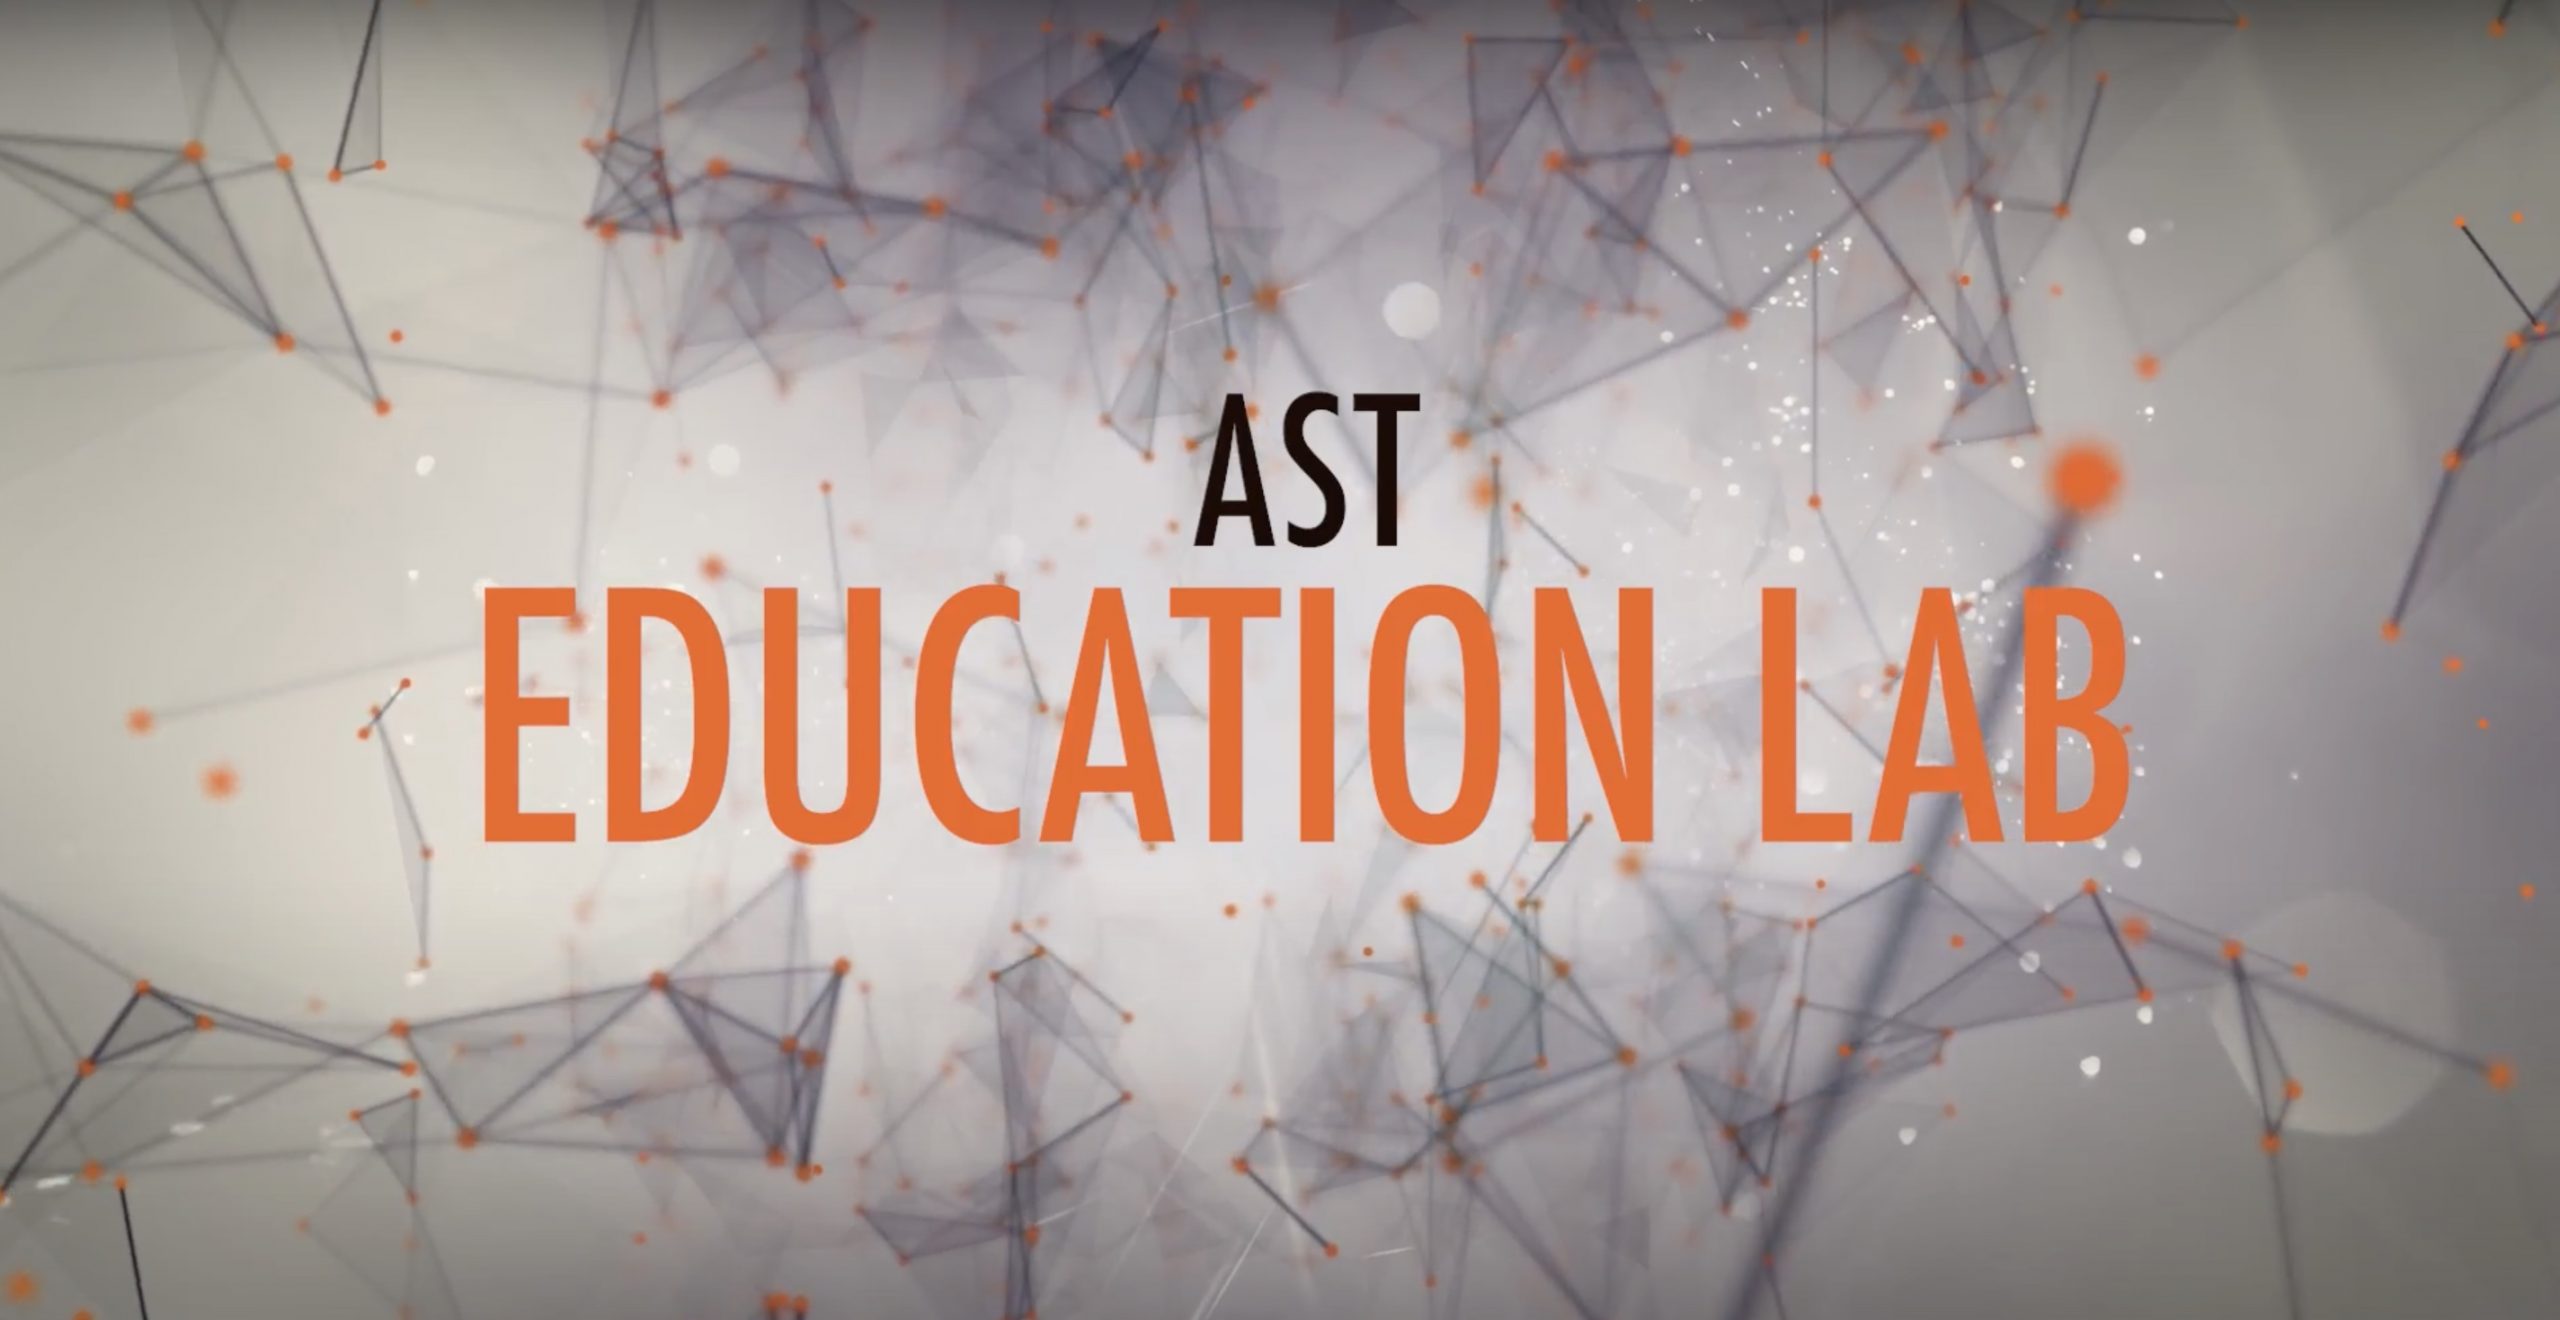 “AST Education LAB” logo